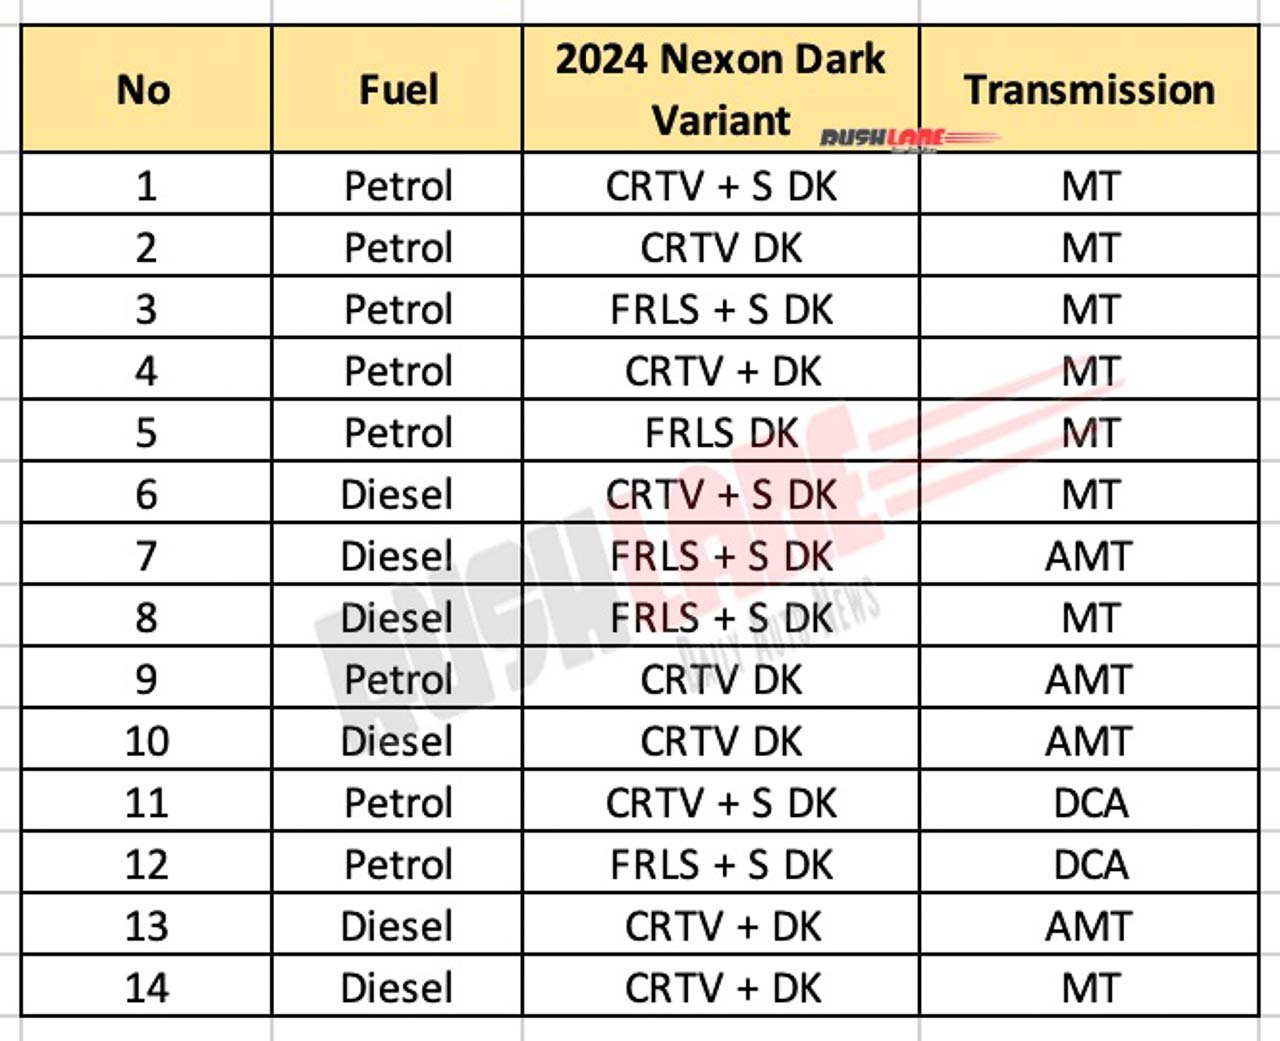 Tata Nexon Dark will have 14 variants on offer